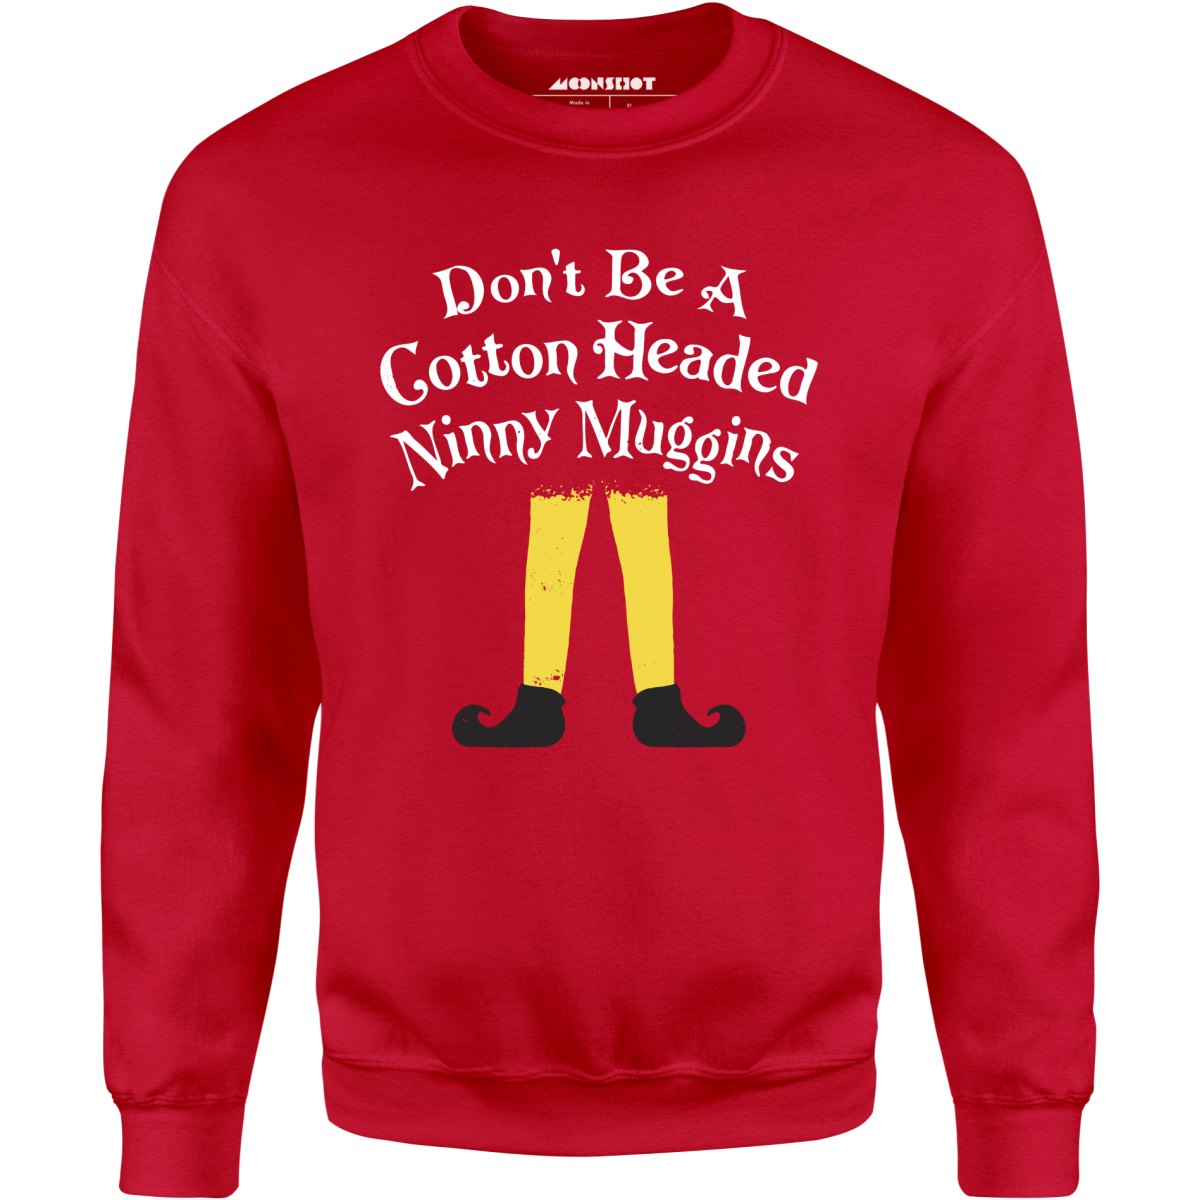 Don't Be a Cotton Headed Ninny Muggins - Unisex Sweatshirt